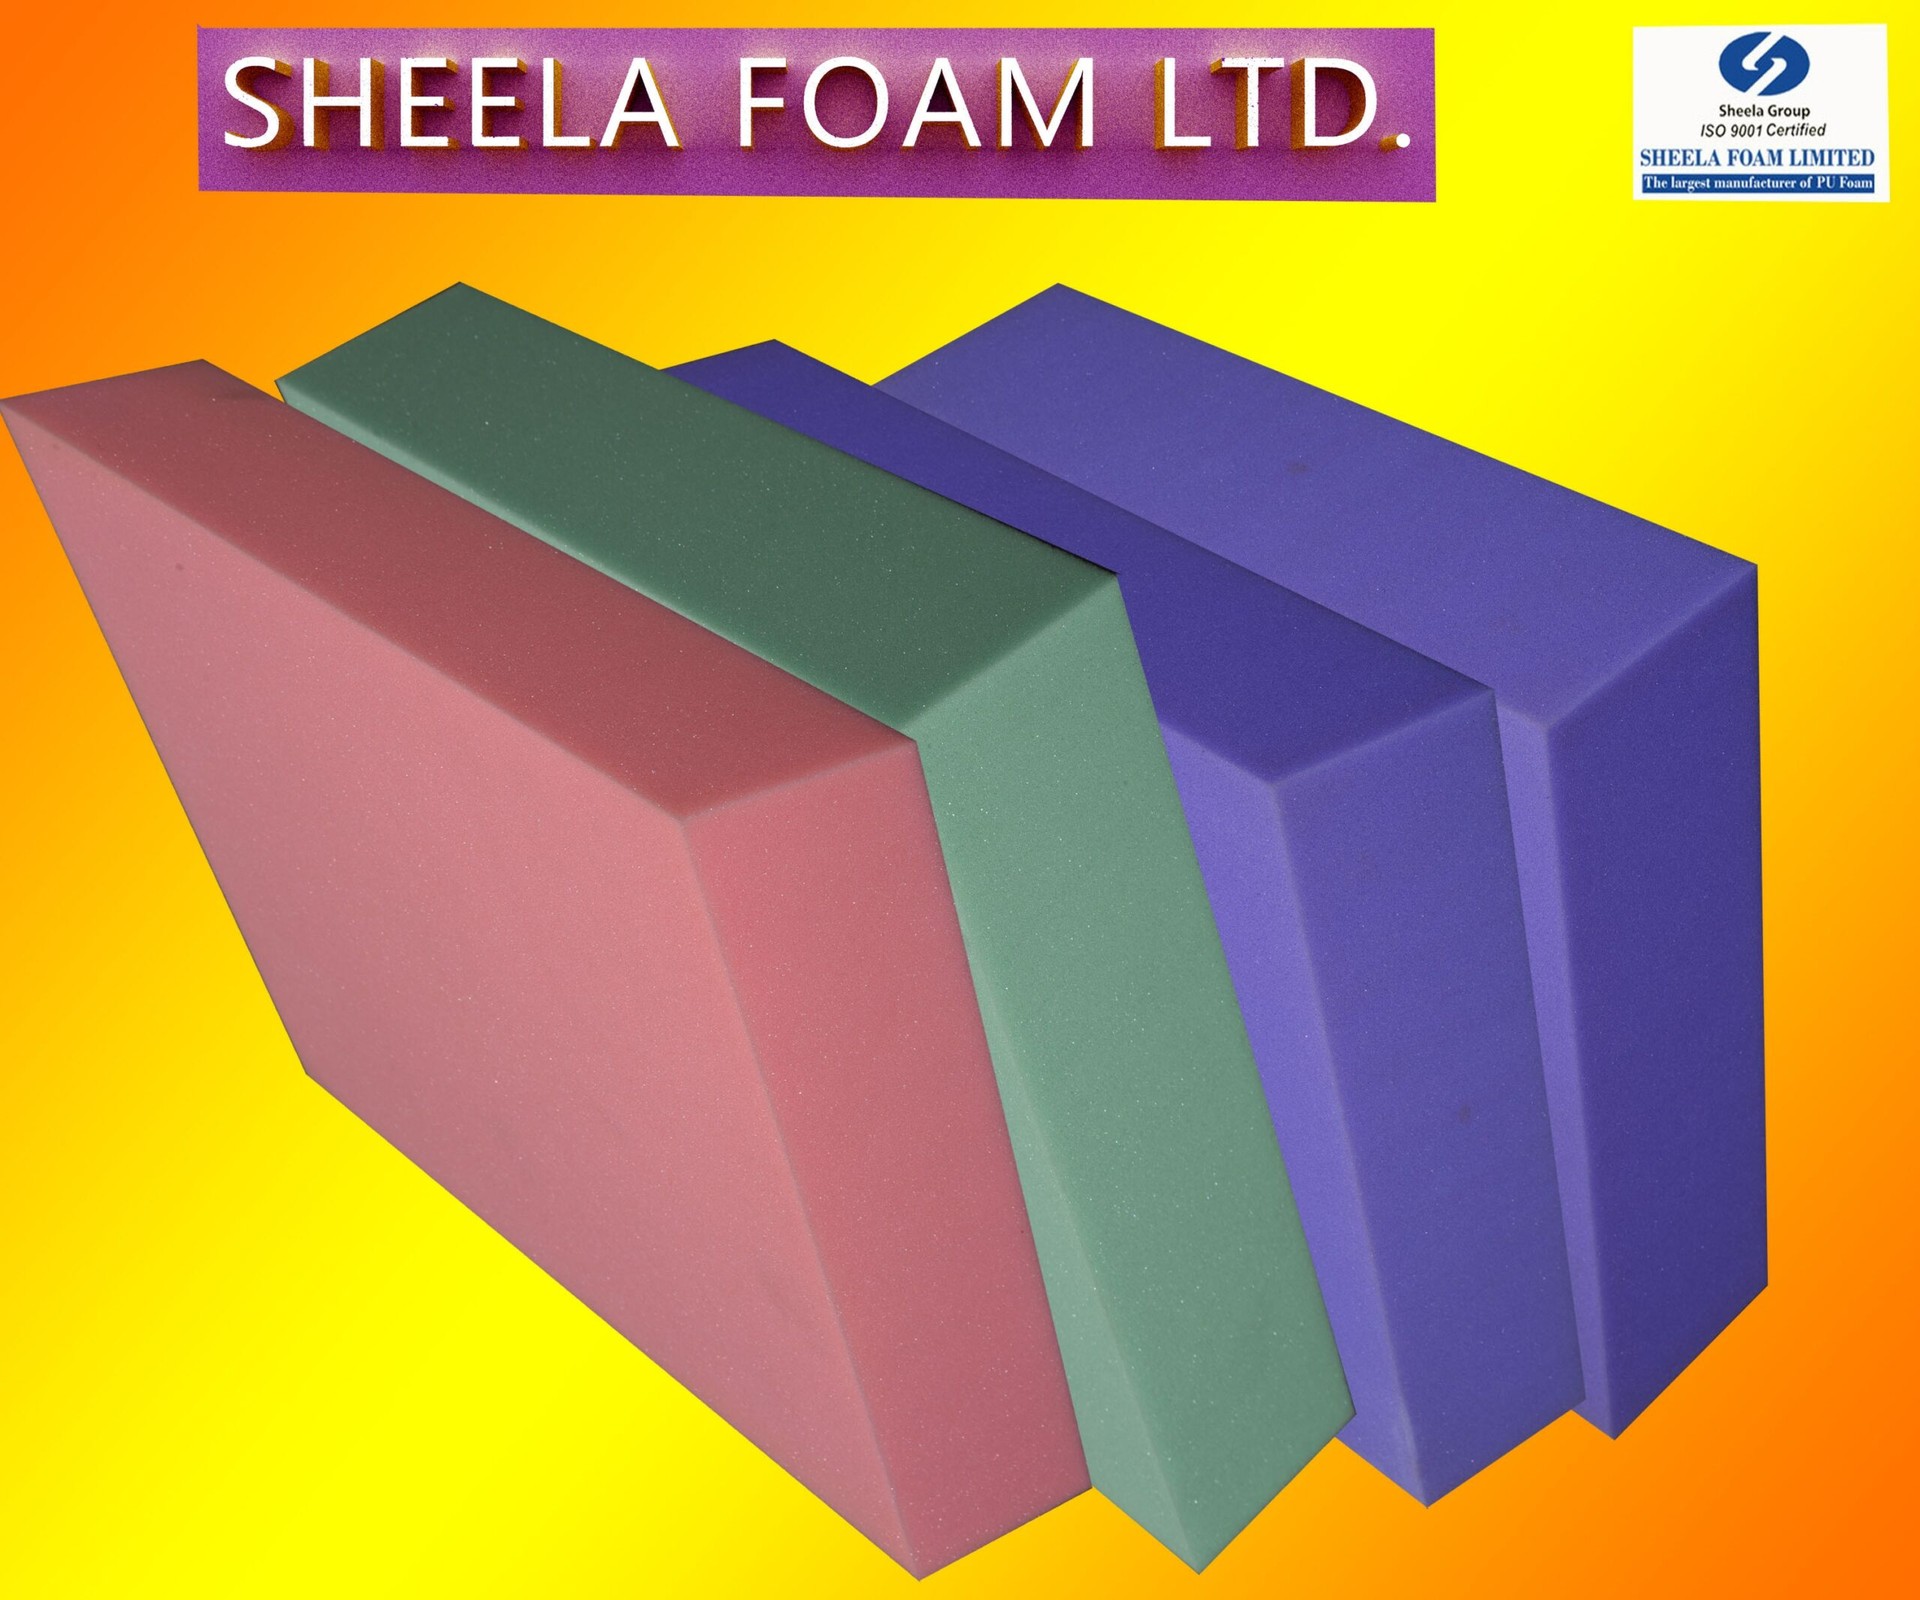 SWOT Analysis of Sheela Foam